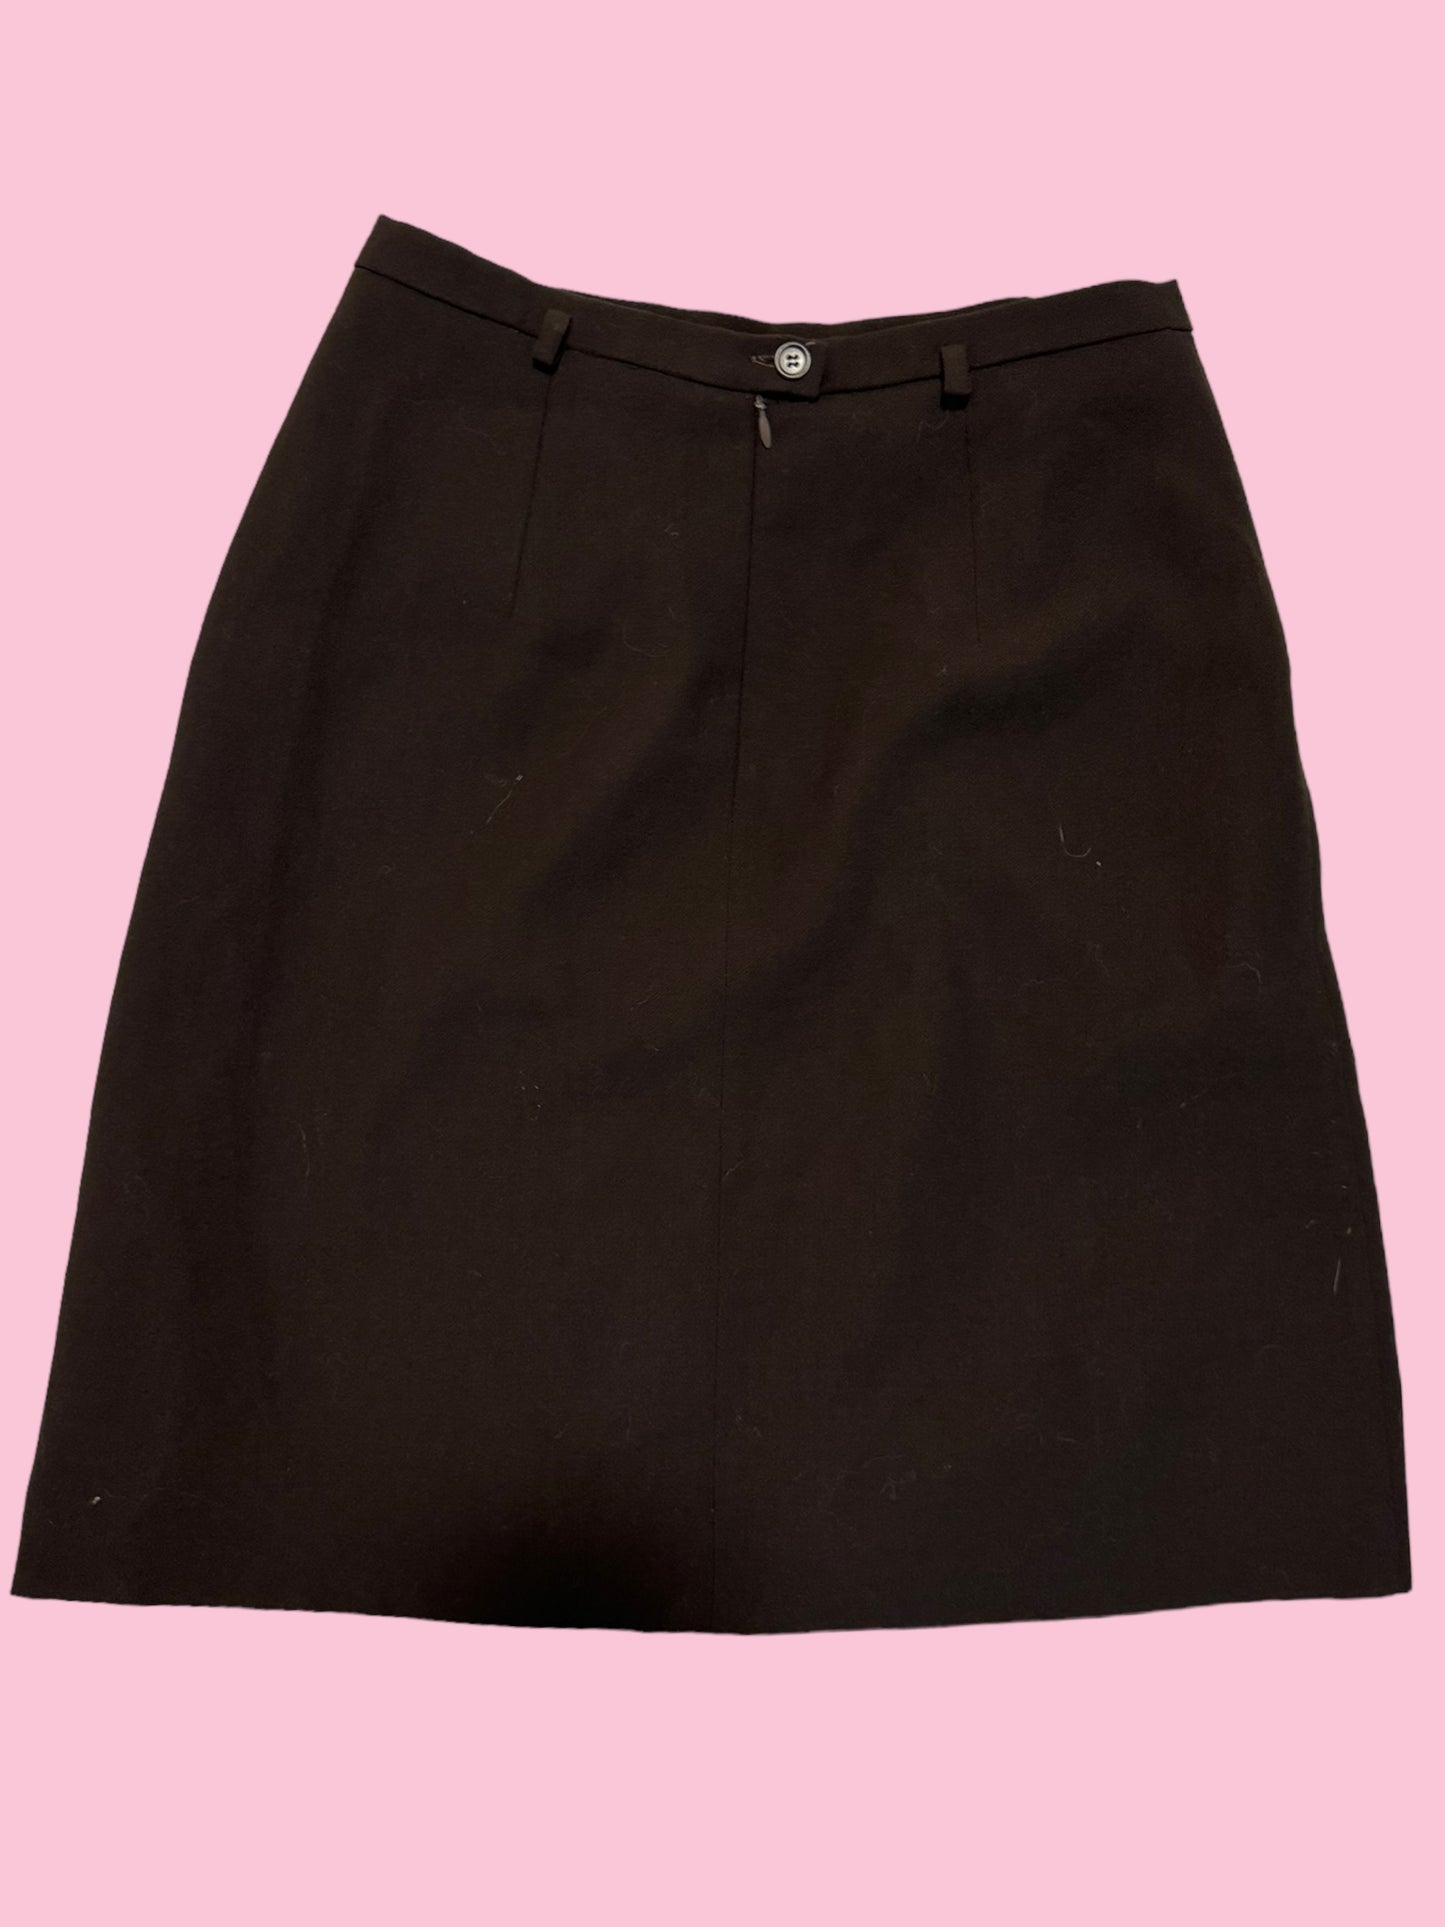 SPORTMAX black skirt size large medium